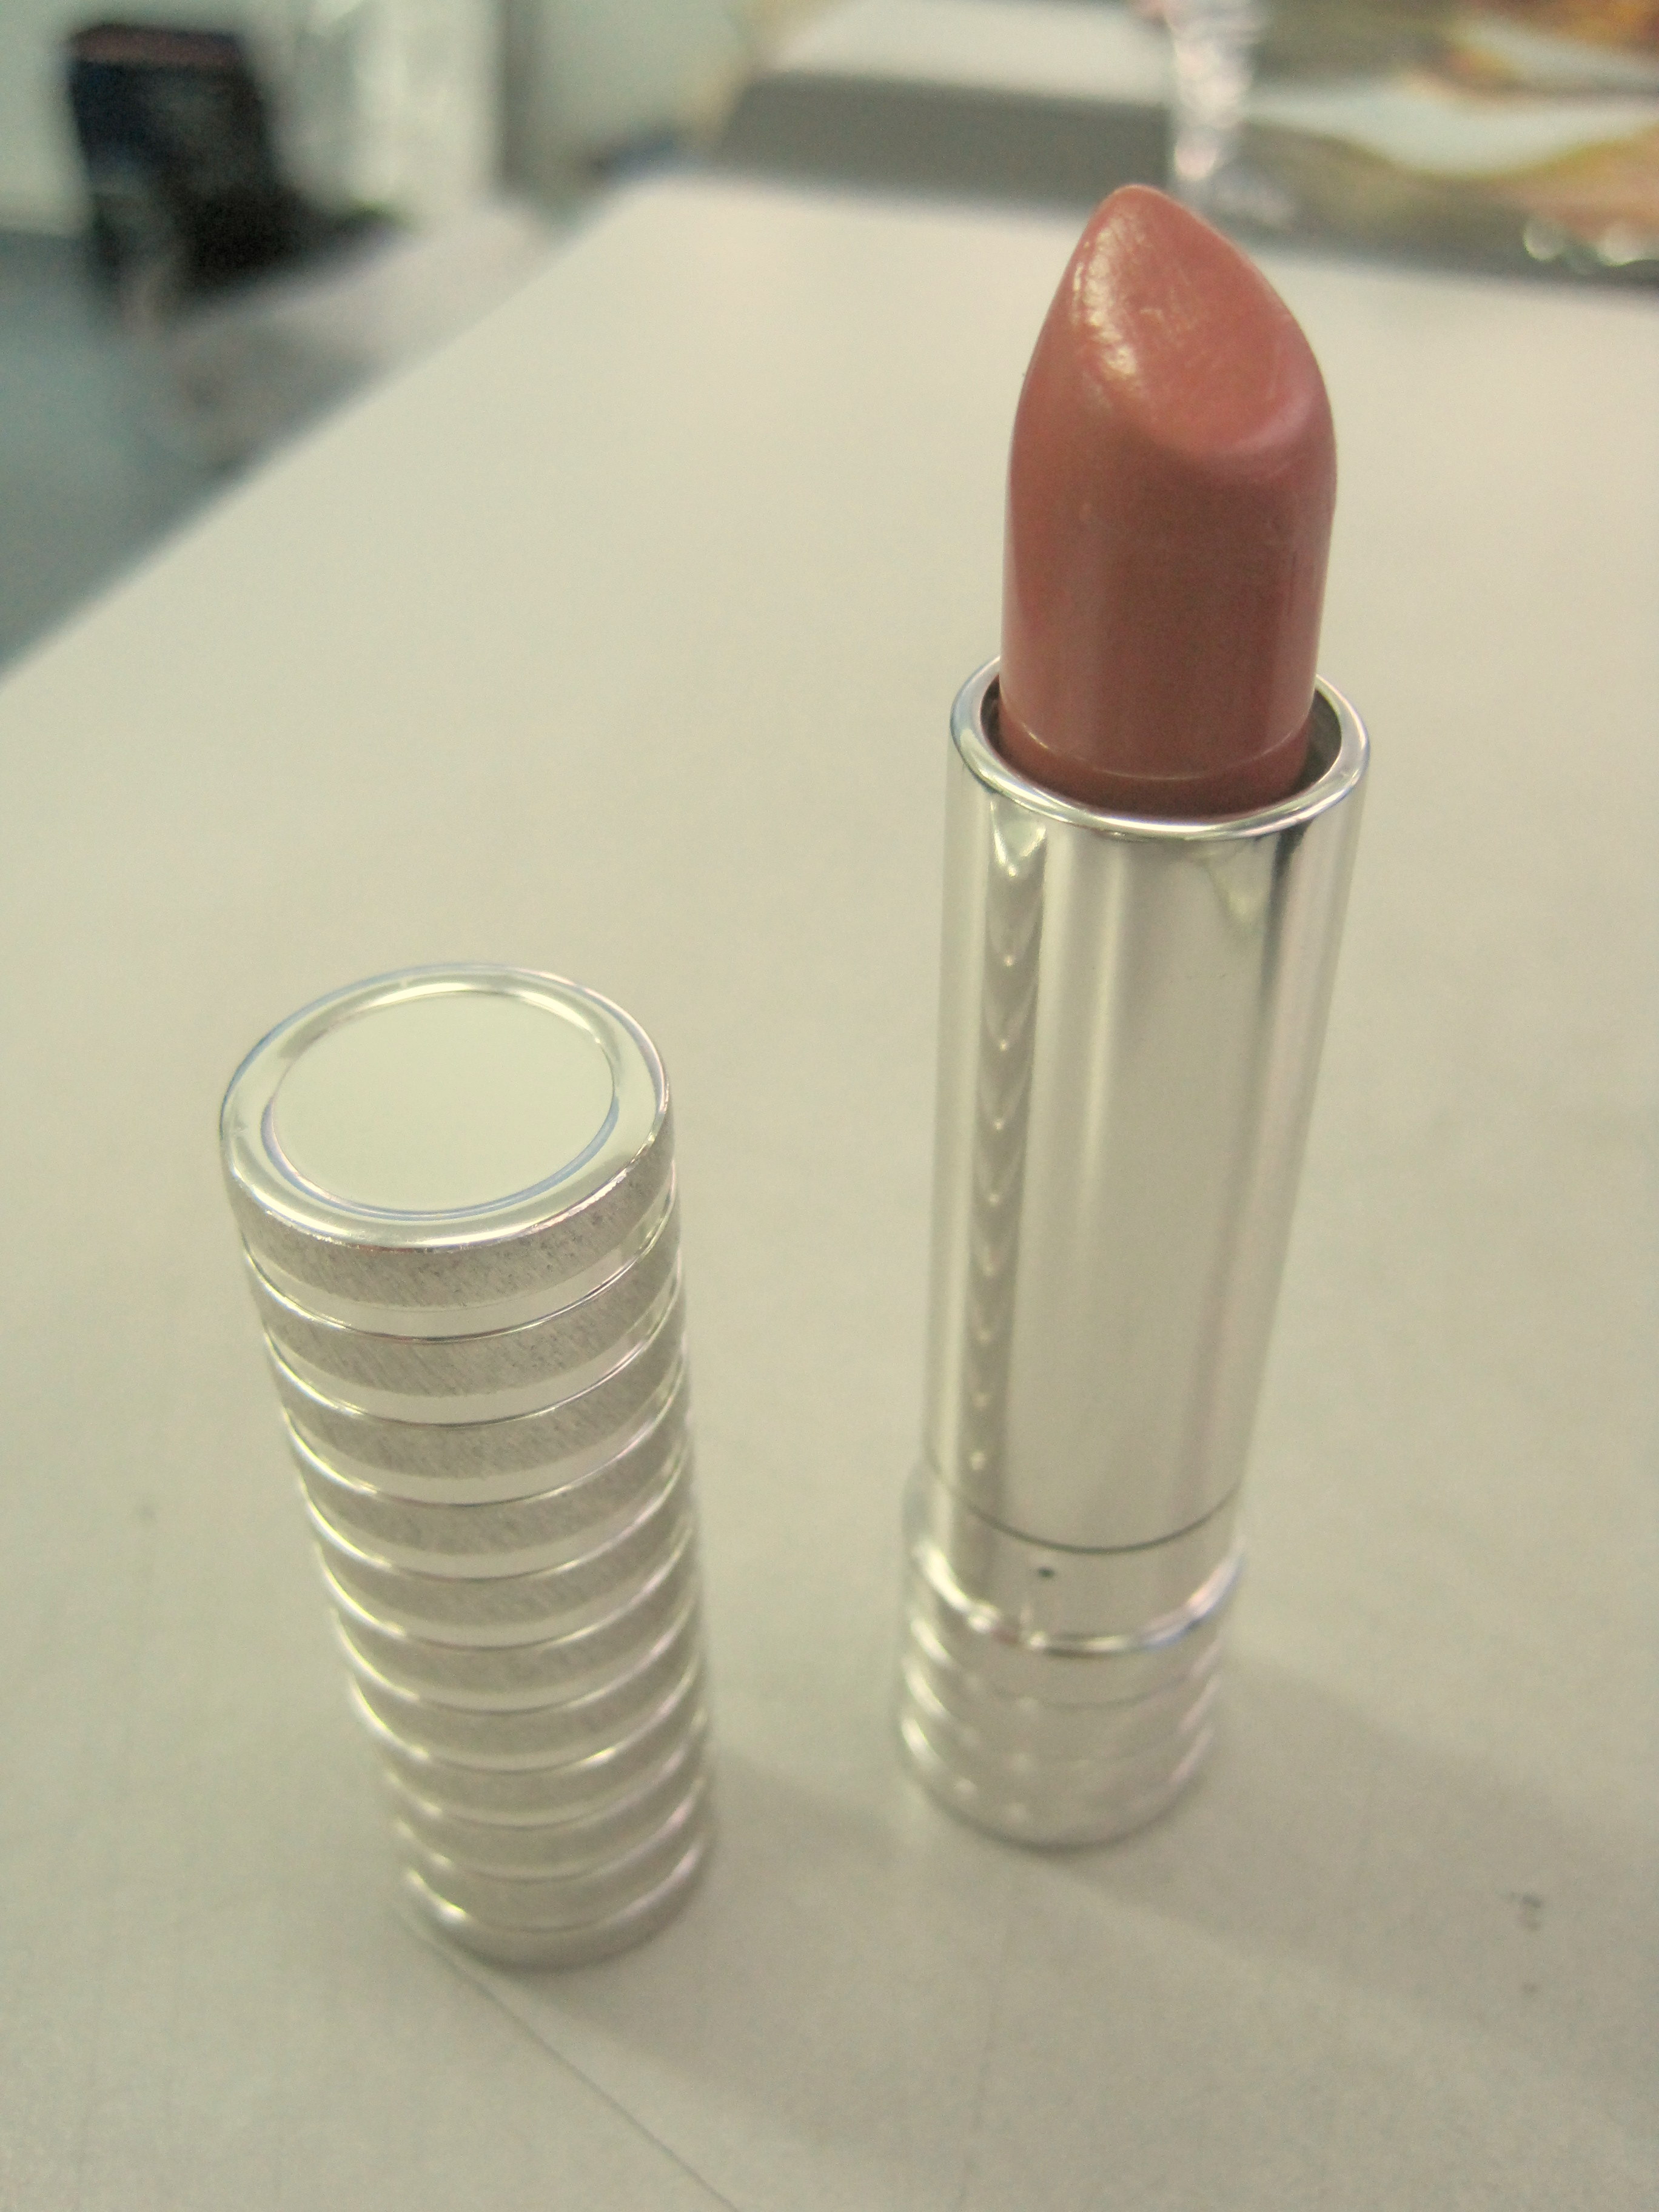 Clinique twilight nude long last lipstick